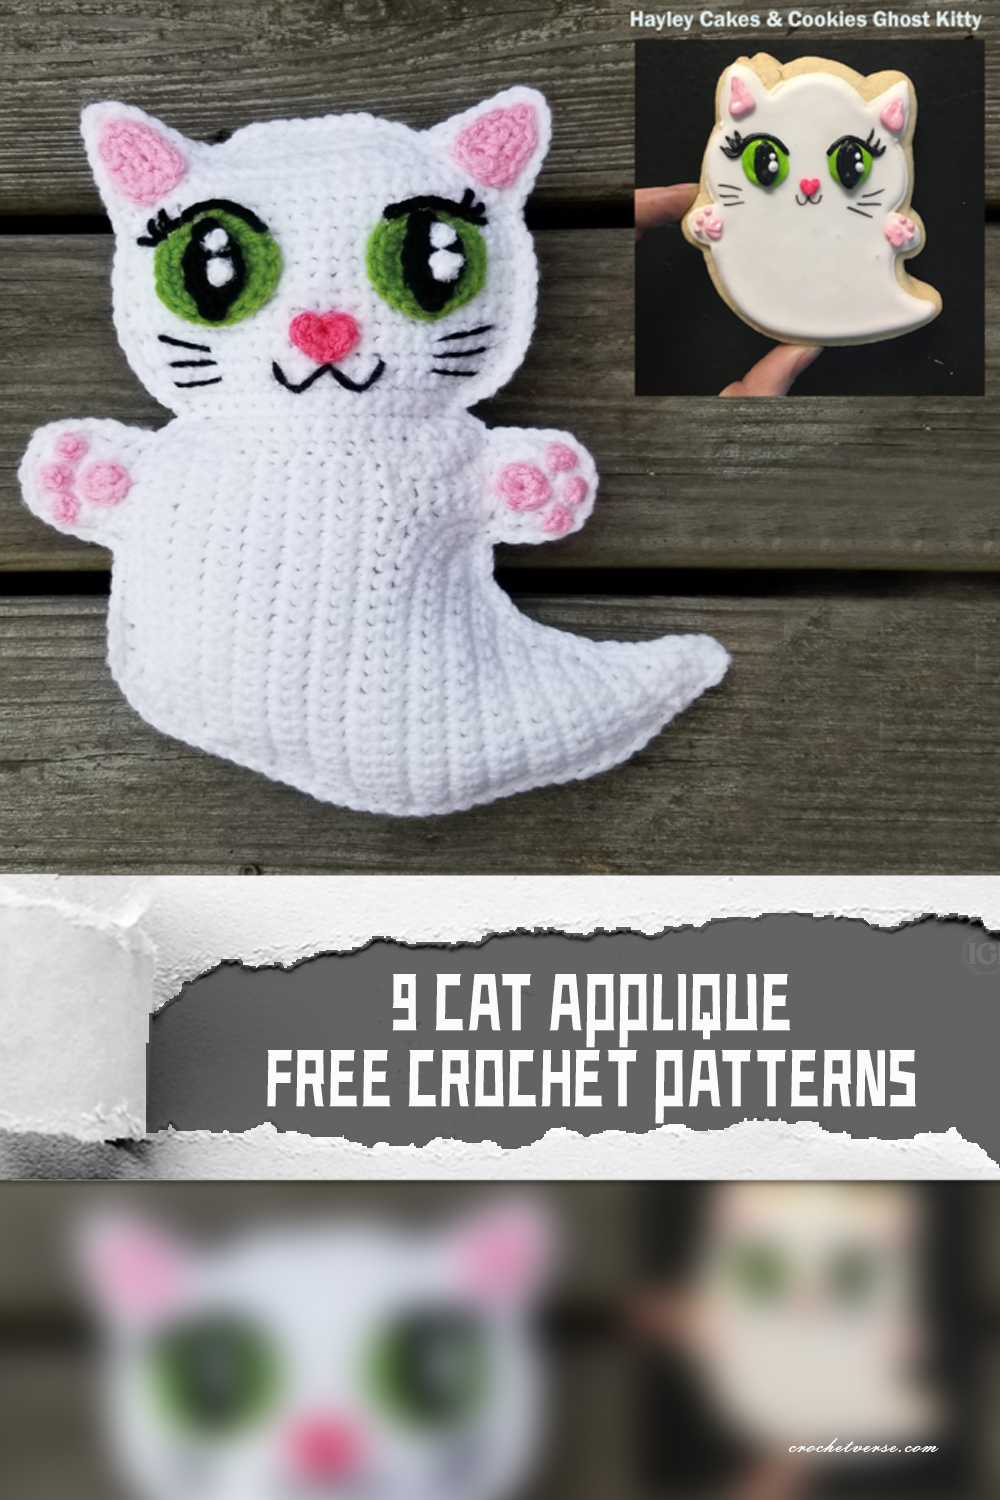 9 Cat Applique FREE Crochet Patterns